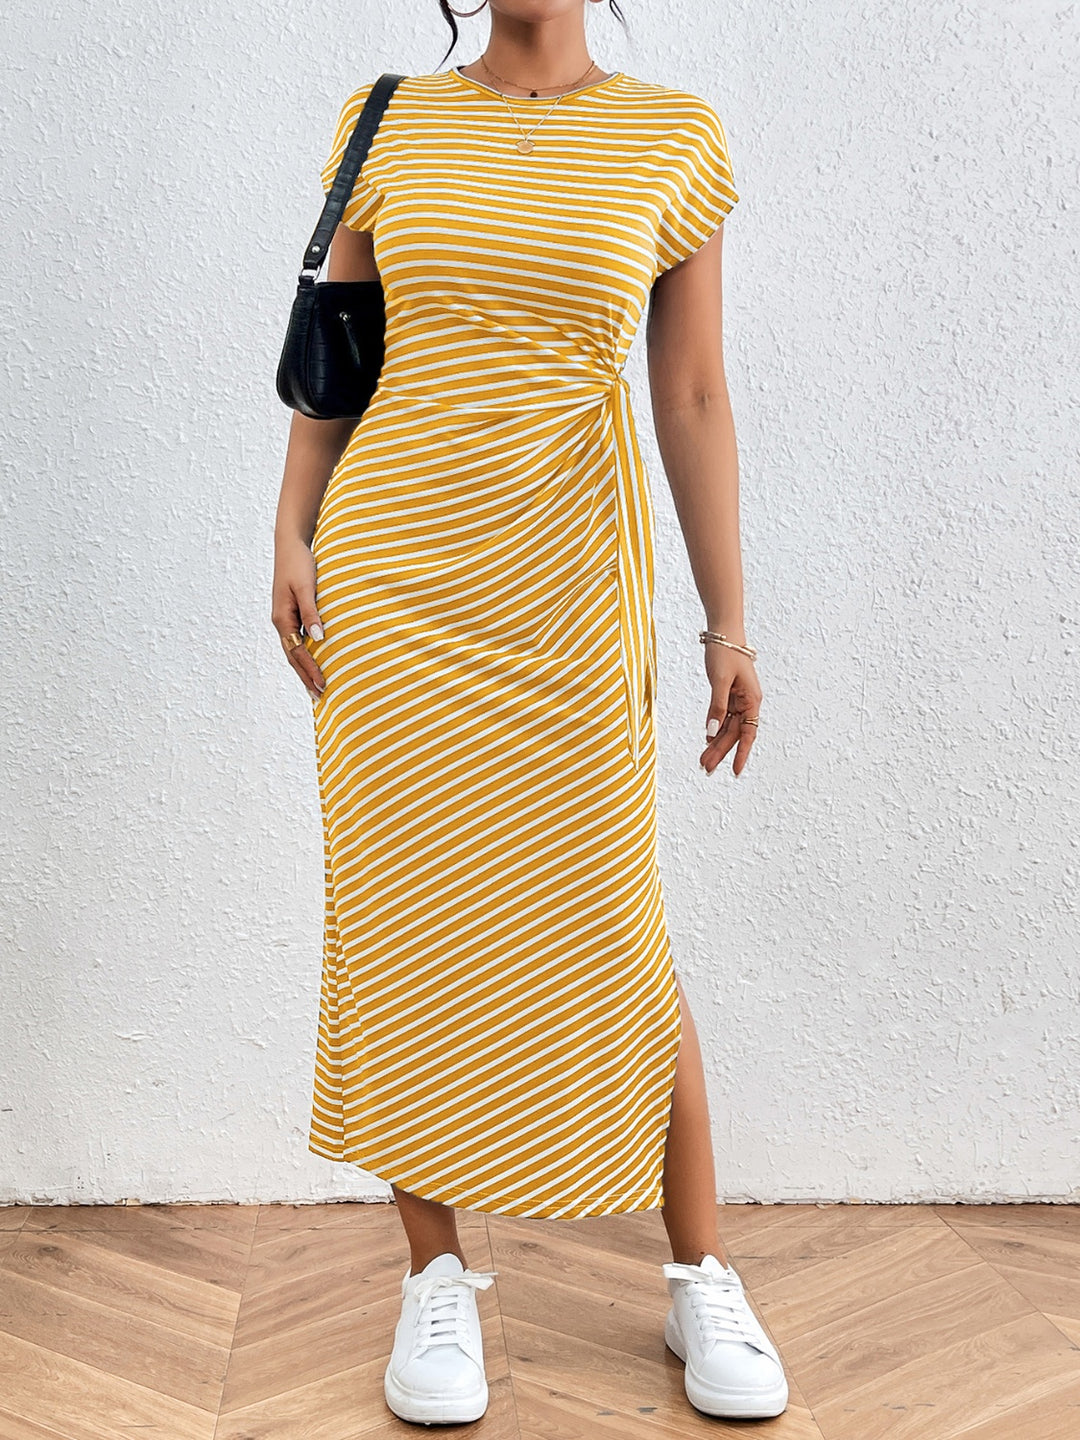 Summering Striped Dress